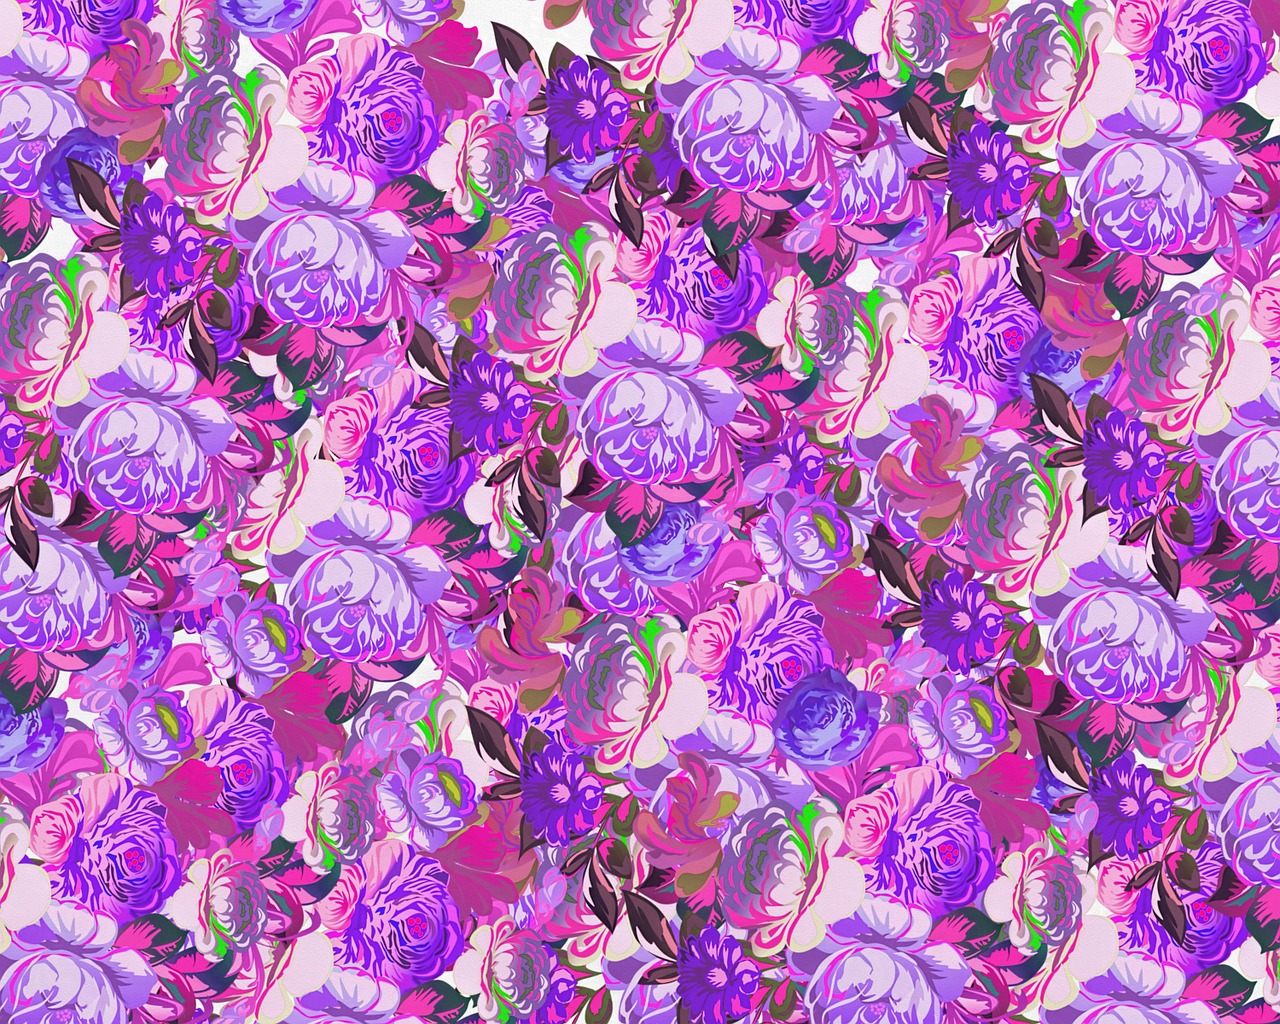 flowers abstract digital art free photo